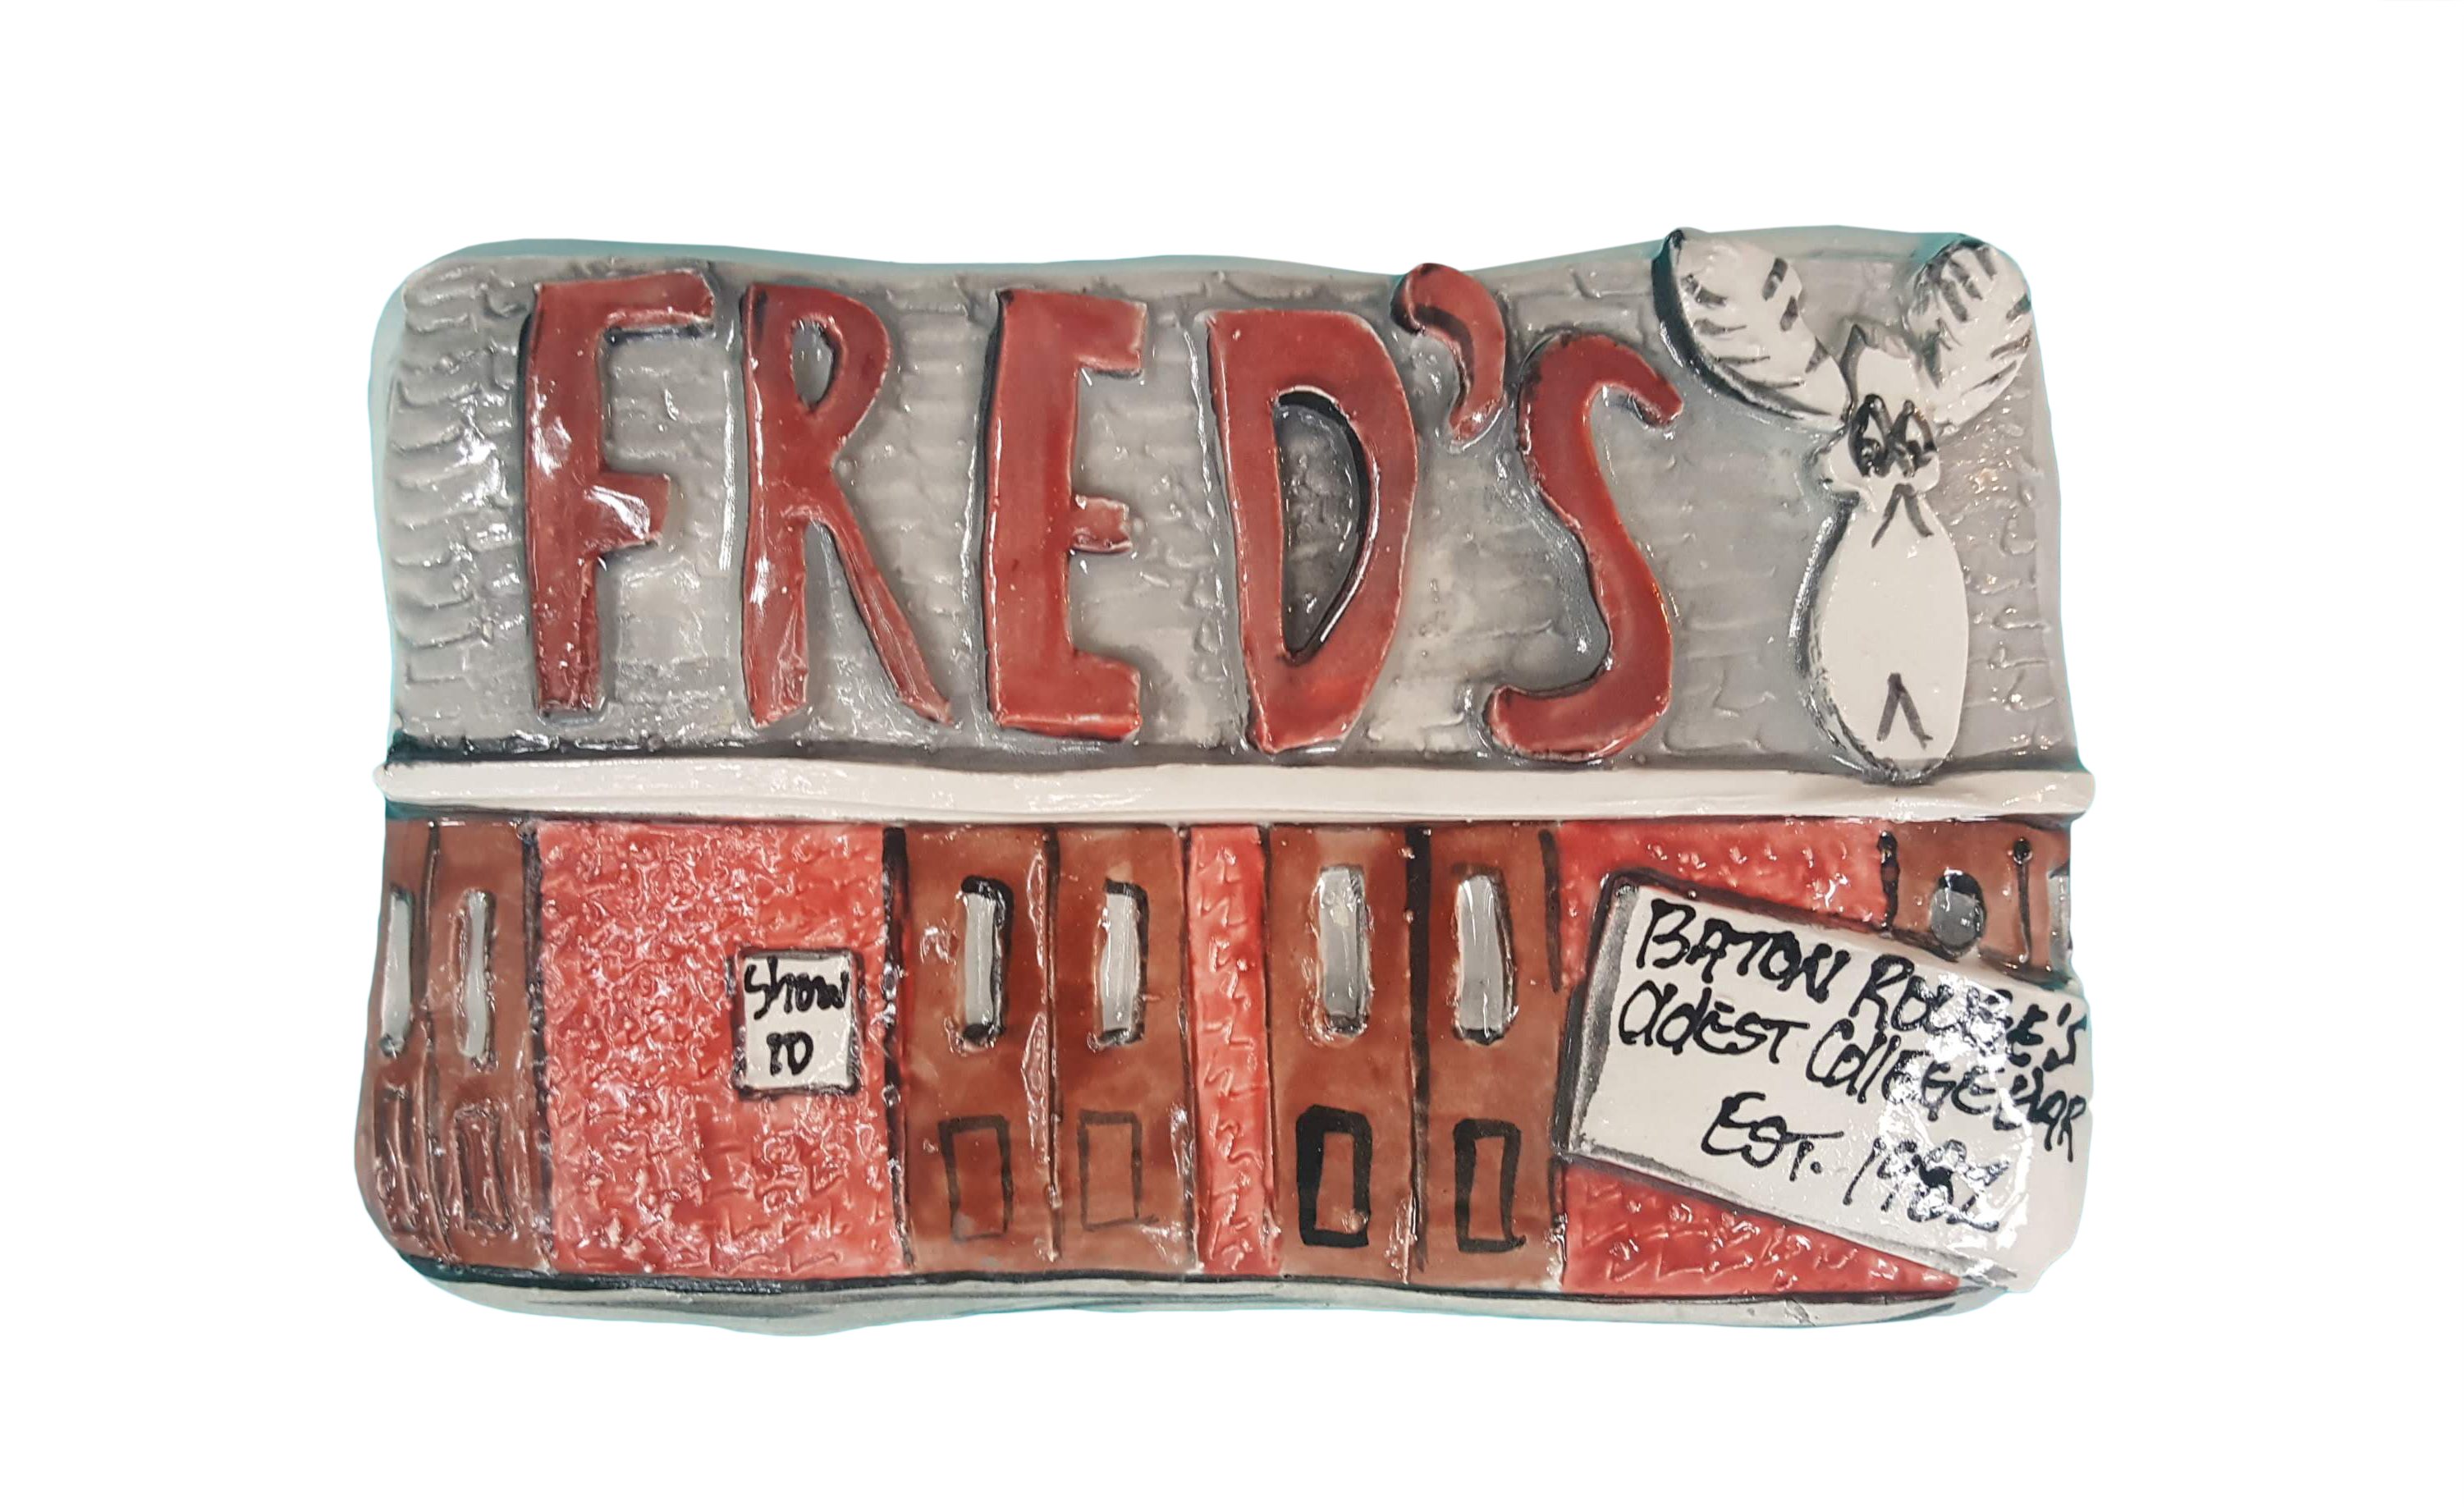 Fred’s Bar